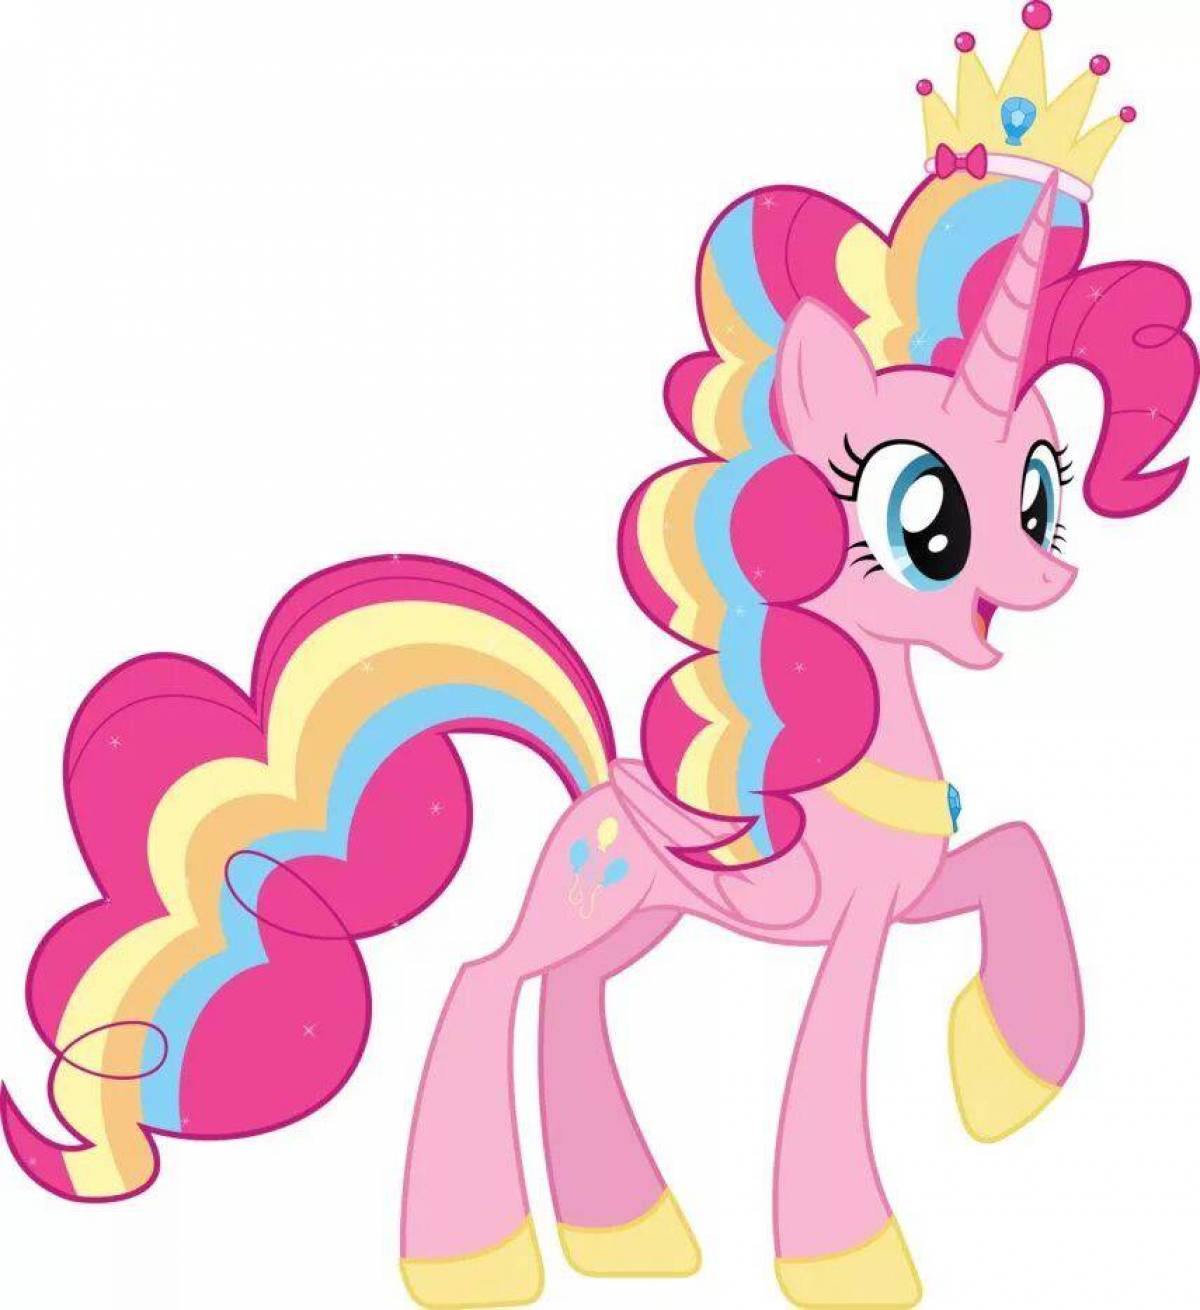 Май литл пони детские. МЛП Пинки. My little Pony Пинки Пай. My little Pony принцесса Пинки Пай. Май Литлл понт ринкипай.